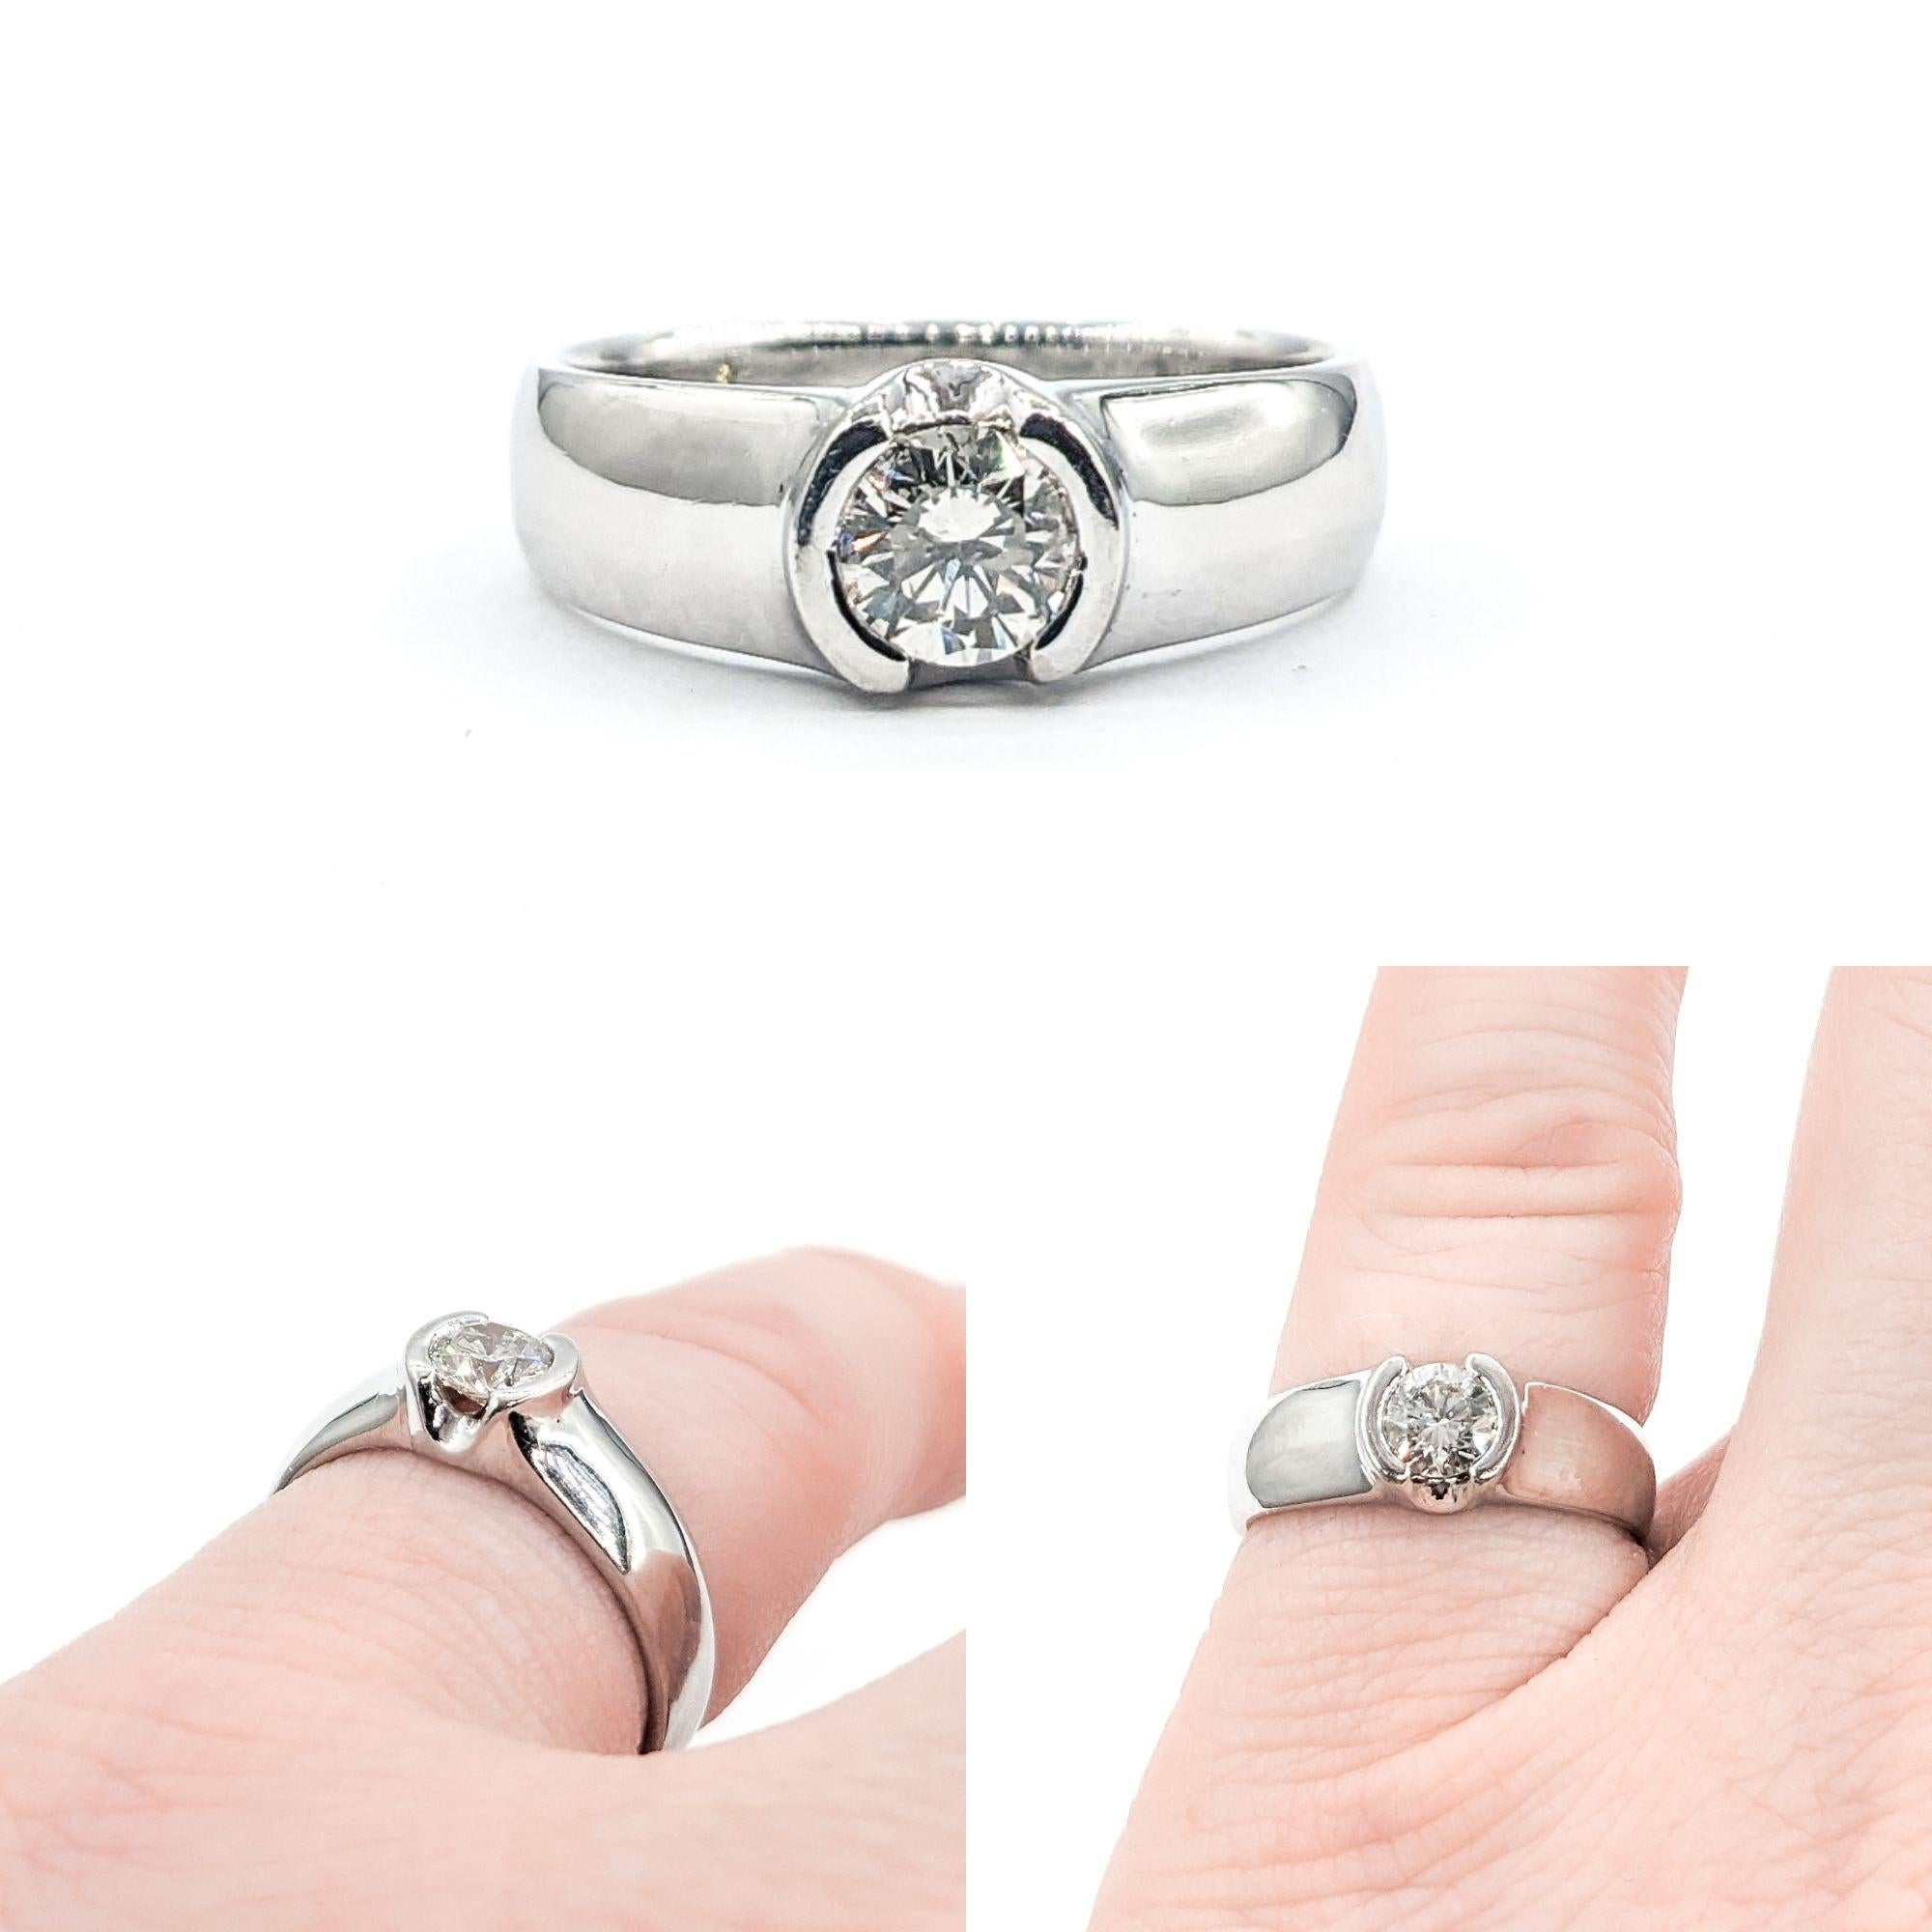 Half Bezel Diamond Engagement Ring In Platinum


This exquisite Diamond Engagement Ring, crafted in premium 900pt Platinum, showcases a stunning .40ct diamond in a Half Bezel Set complemented by a sleek 5mm band. The diamond, boasting I clarity and